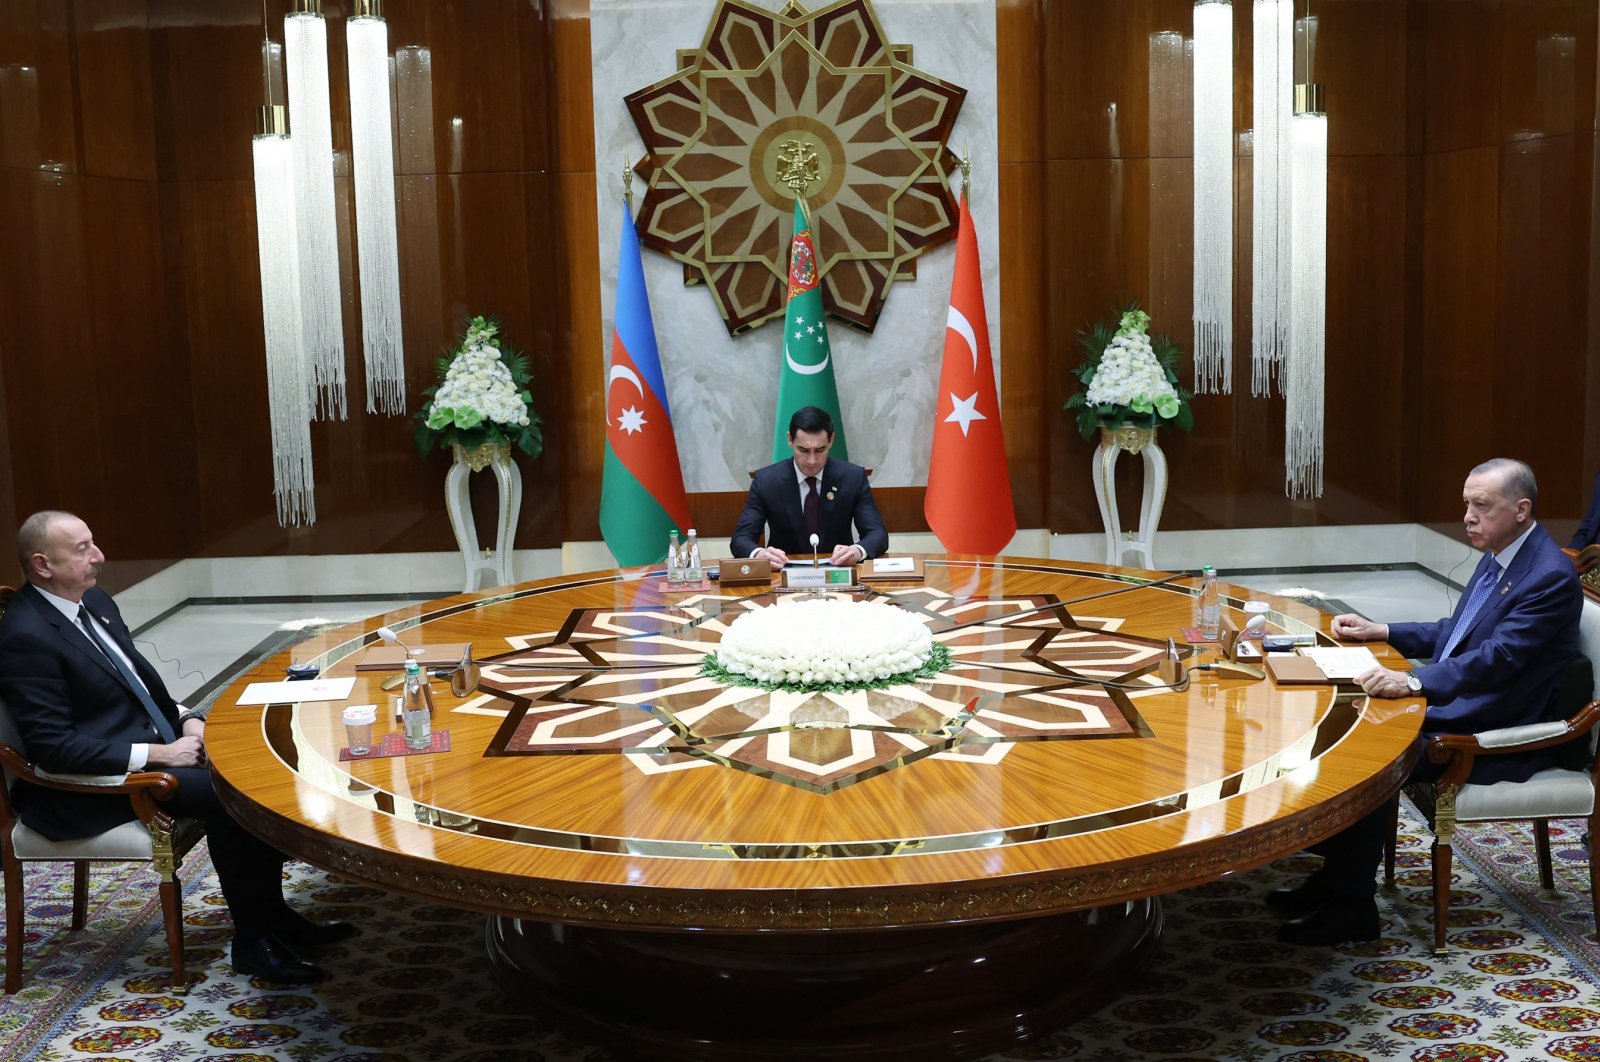 President Recep Tayyip Erdoğan (R) meeting with President of Turkmenistan Serdar Berdymukhamedov (C) and President of Azerbaijan Ilham Aliyev (L) during a trilateral summit in Awaza, Turkmenistan, Dec. 14, 2022. (Photo by Turkish Presidential Press Office via AFP)